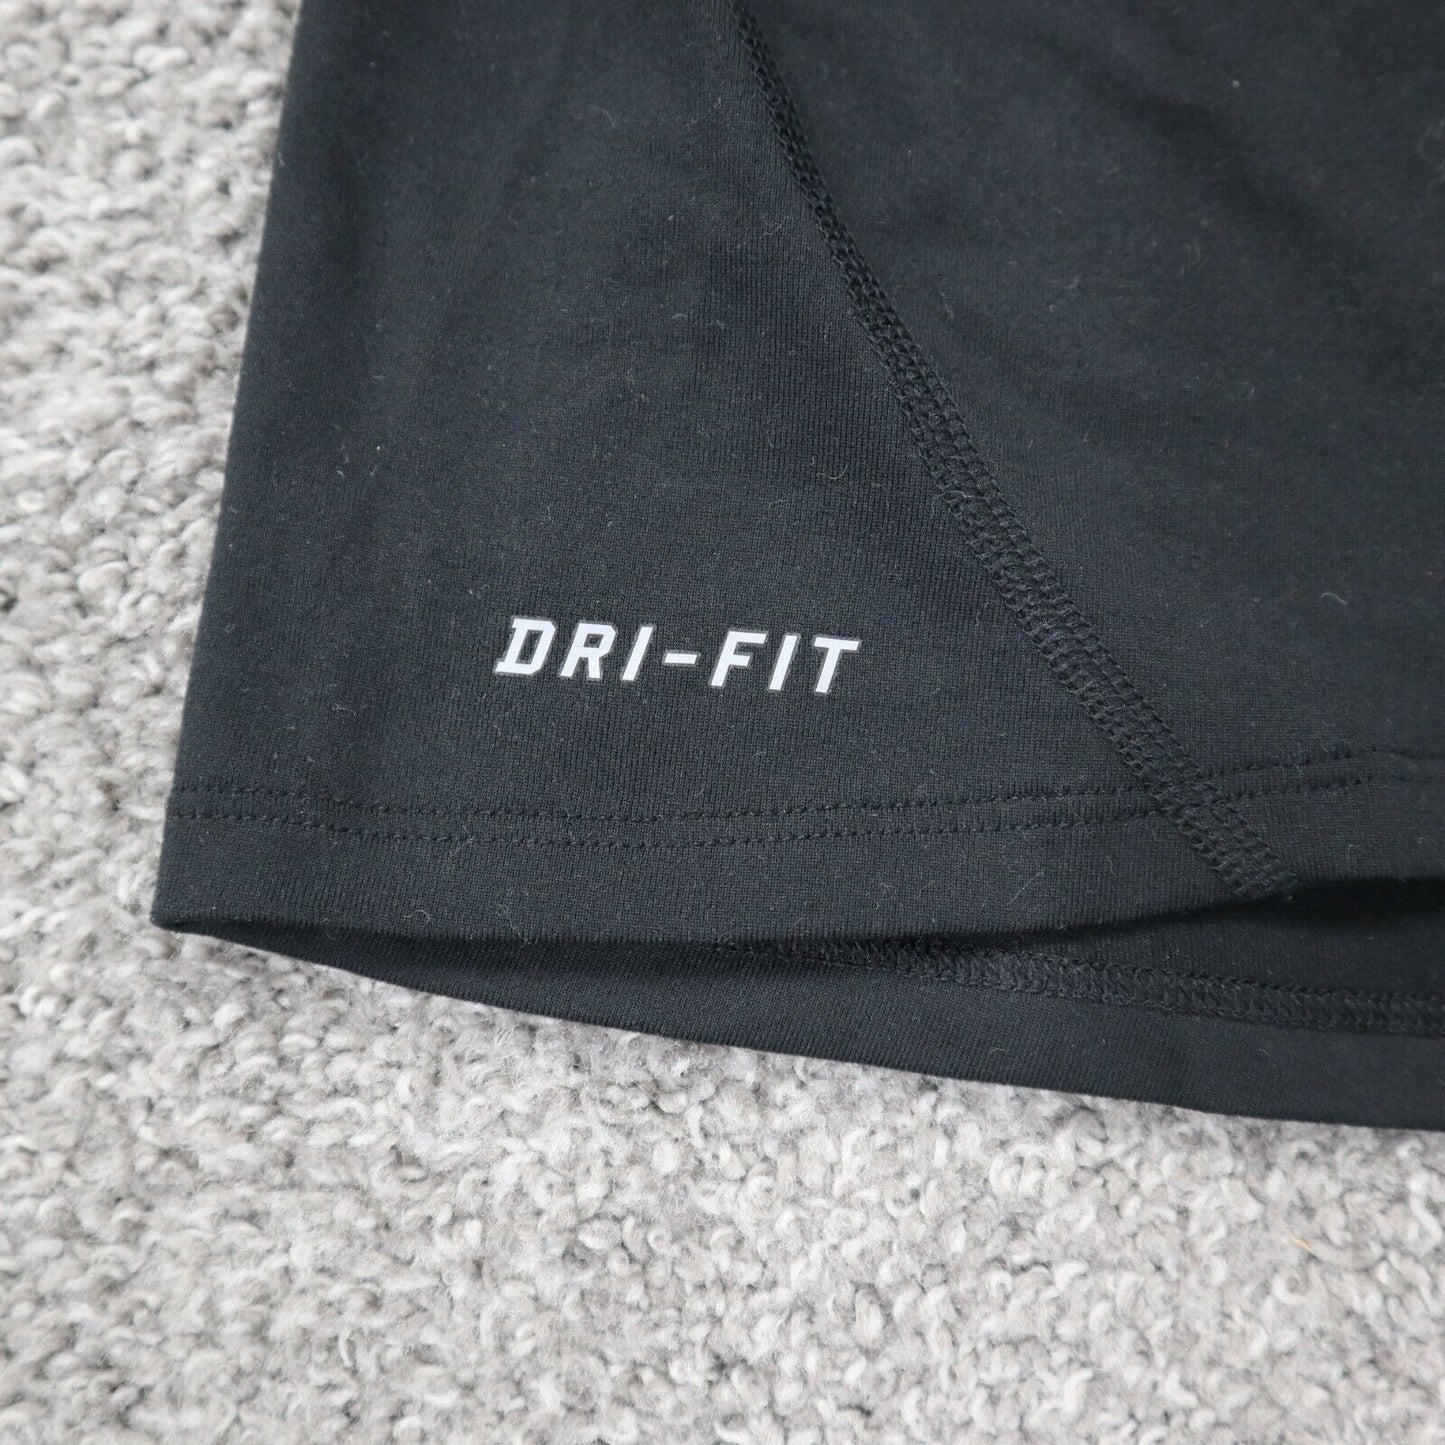 Nike Dri Fit Mens 1/4 Zip Sweatshirt Long Sleeves High Neck Black Size Medium